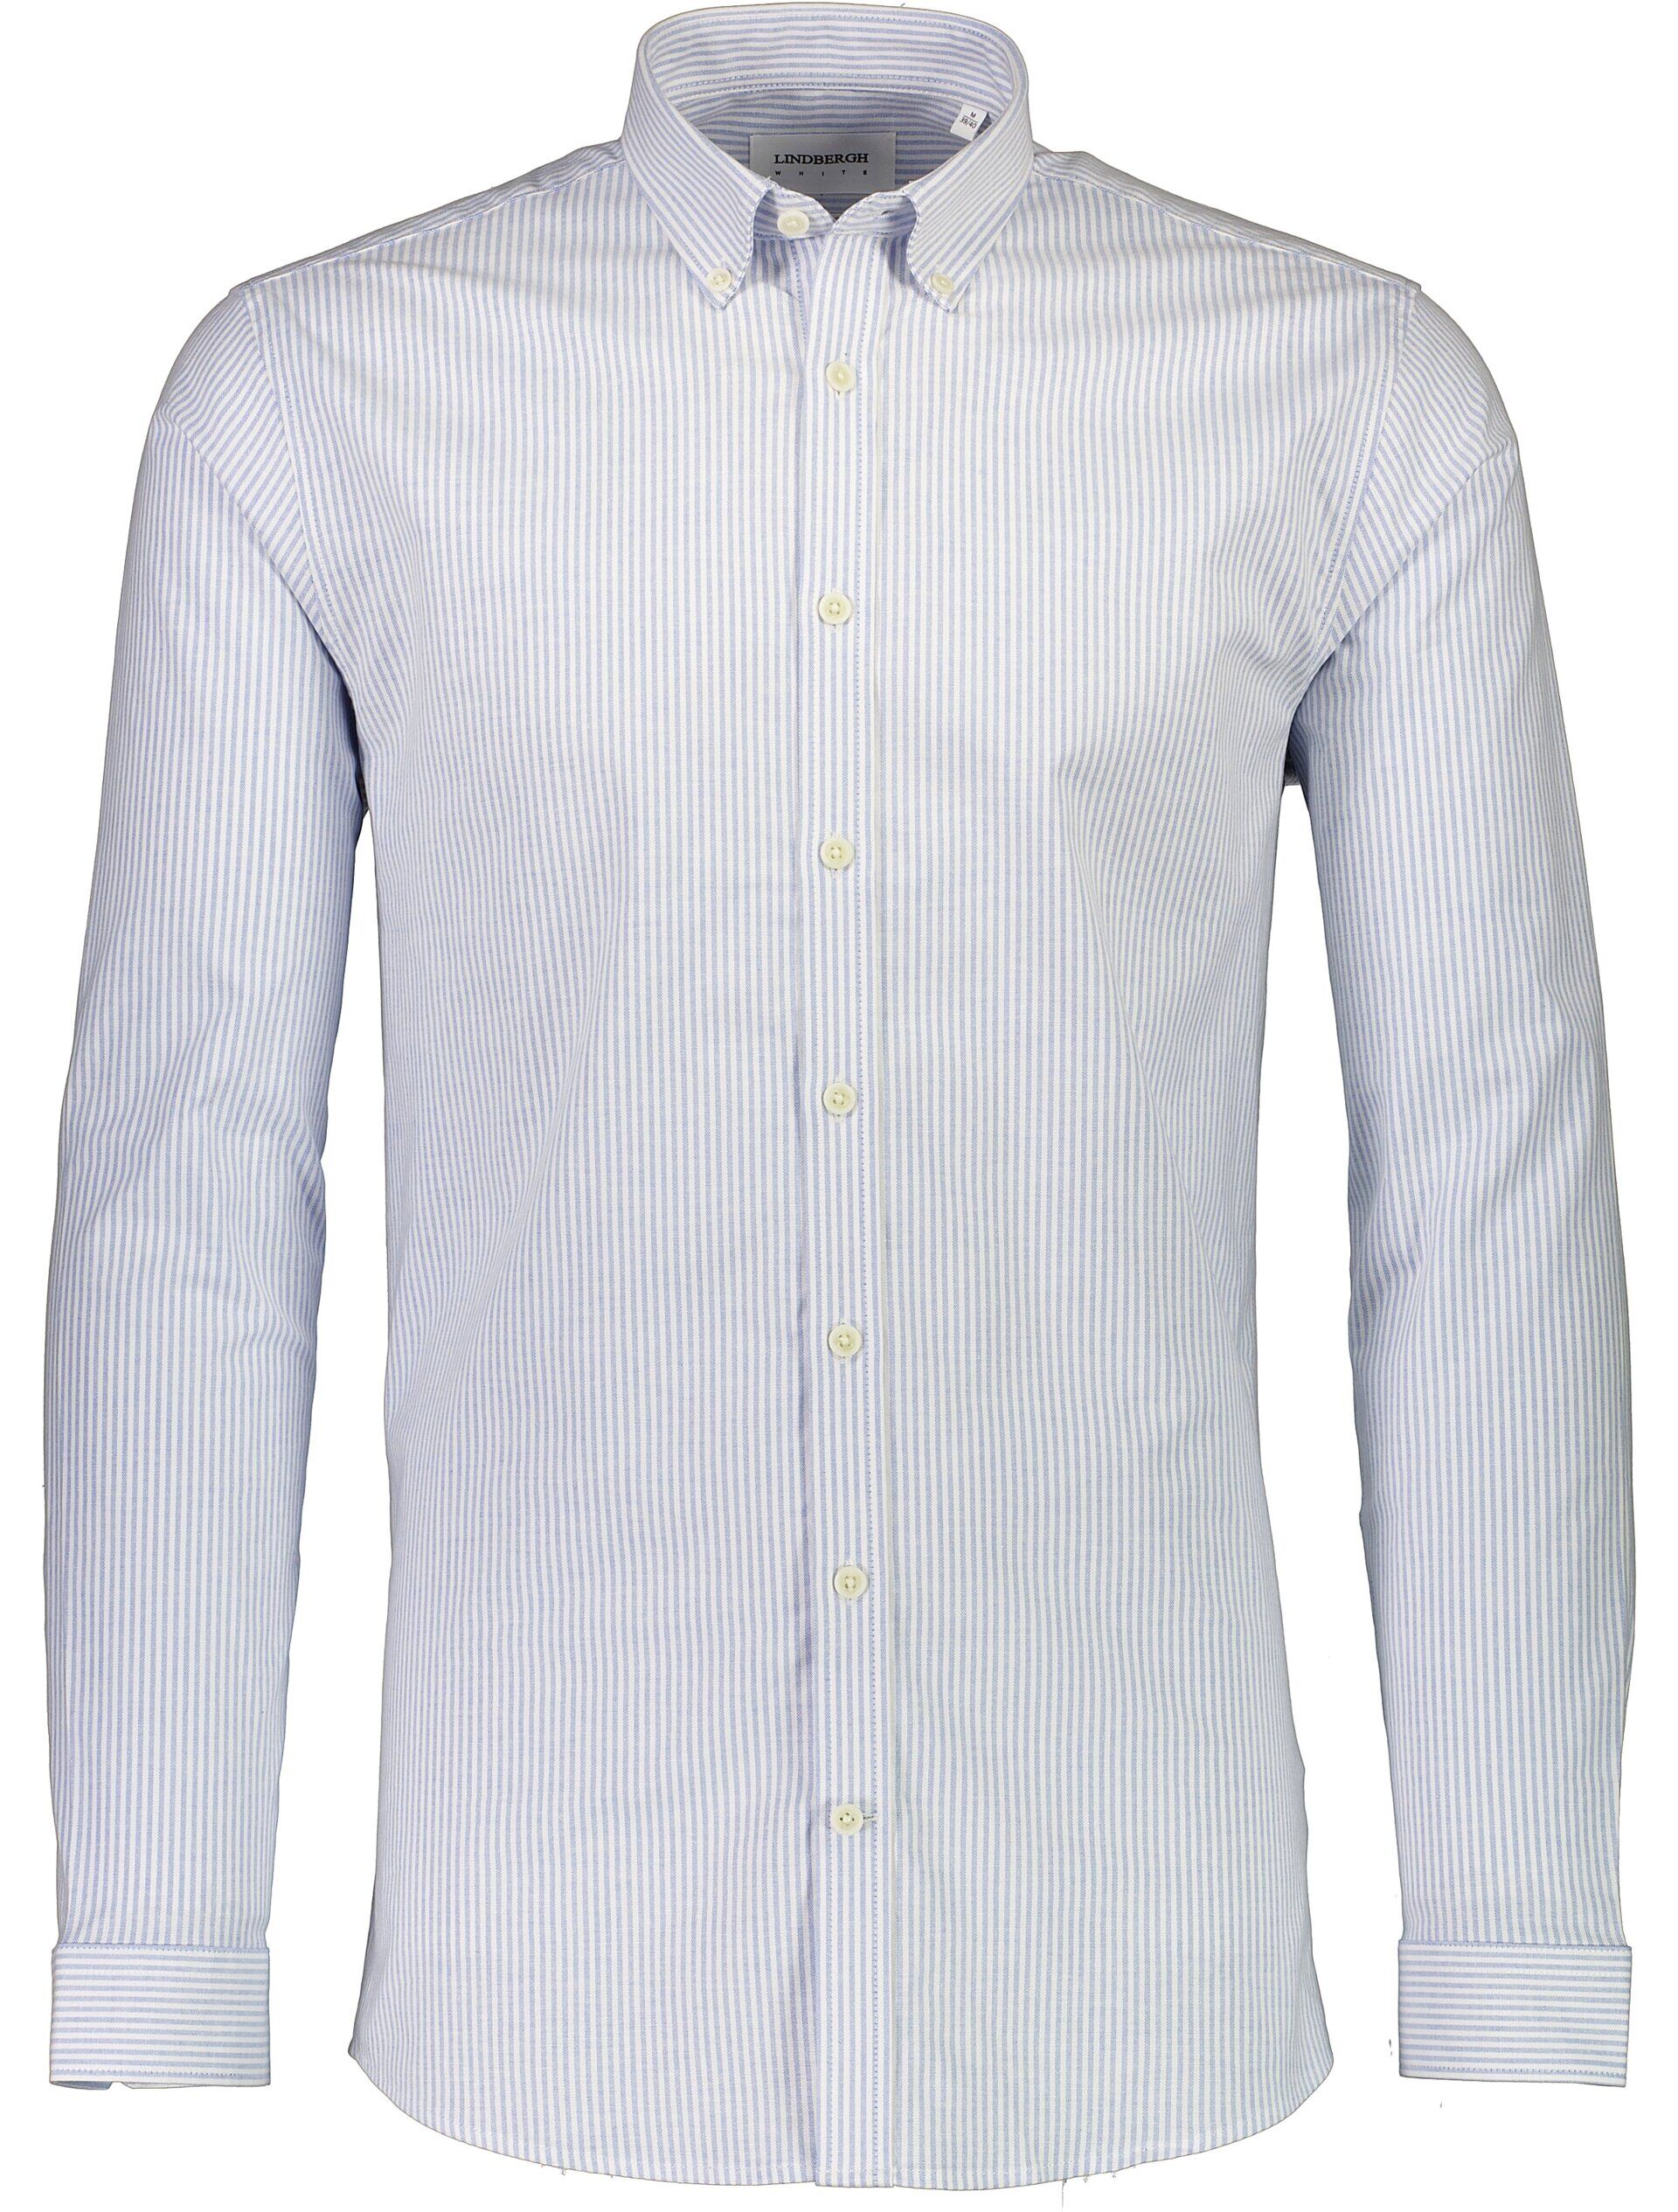 Oxford shirt 30-203296K